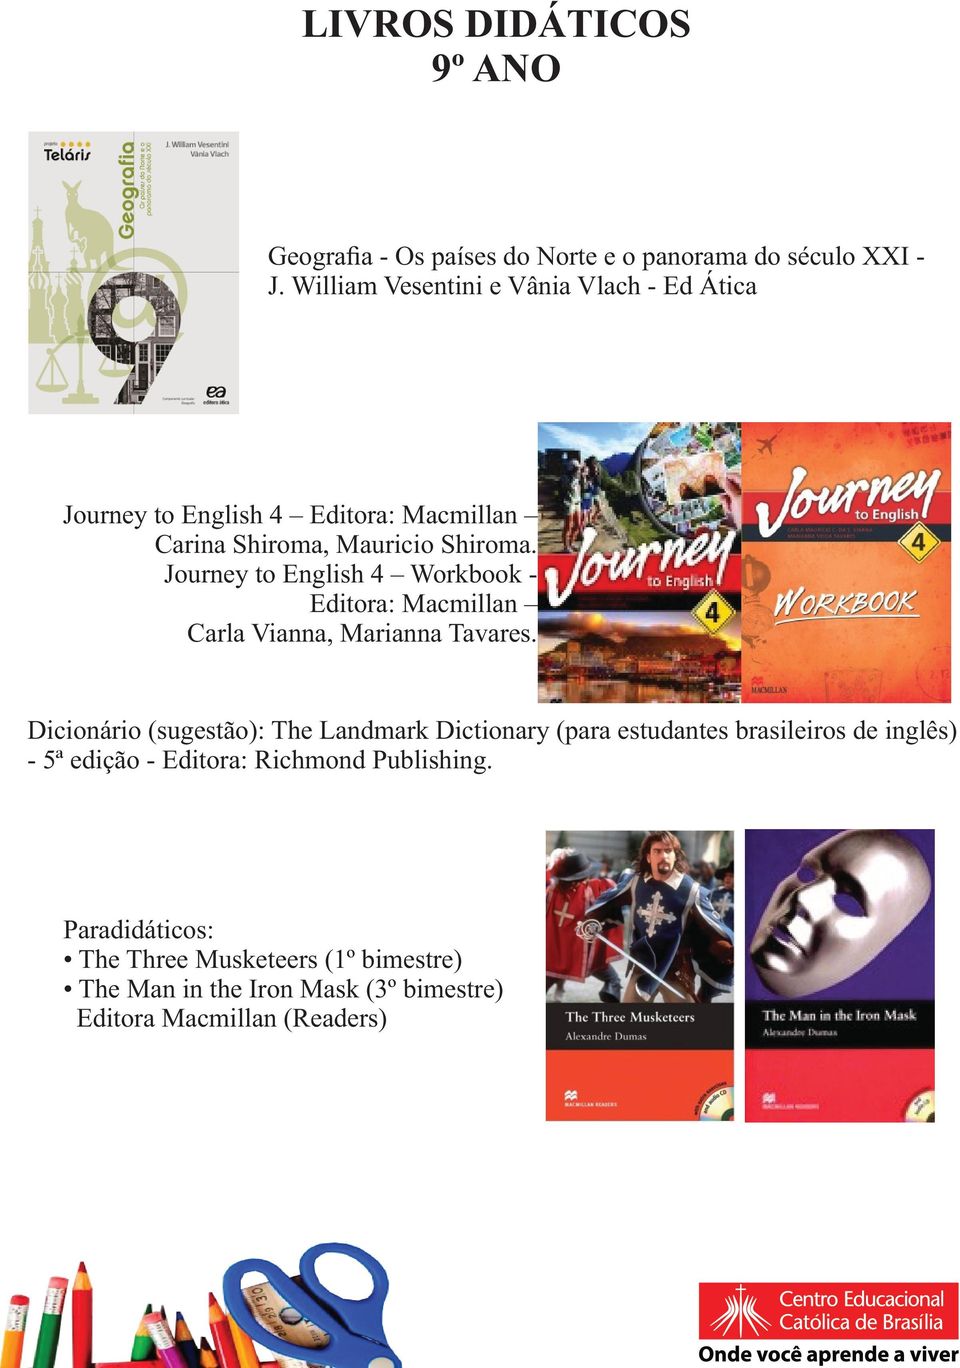 Journey to English 4 Workbook - Editora: Macmillan Carla Vianna, Marianna Tavares.